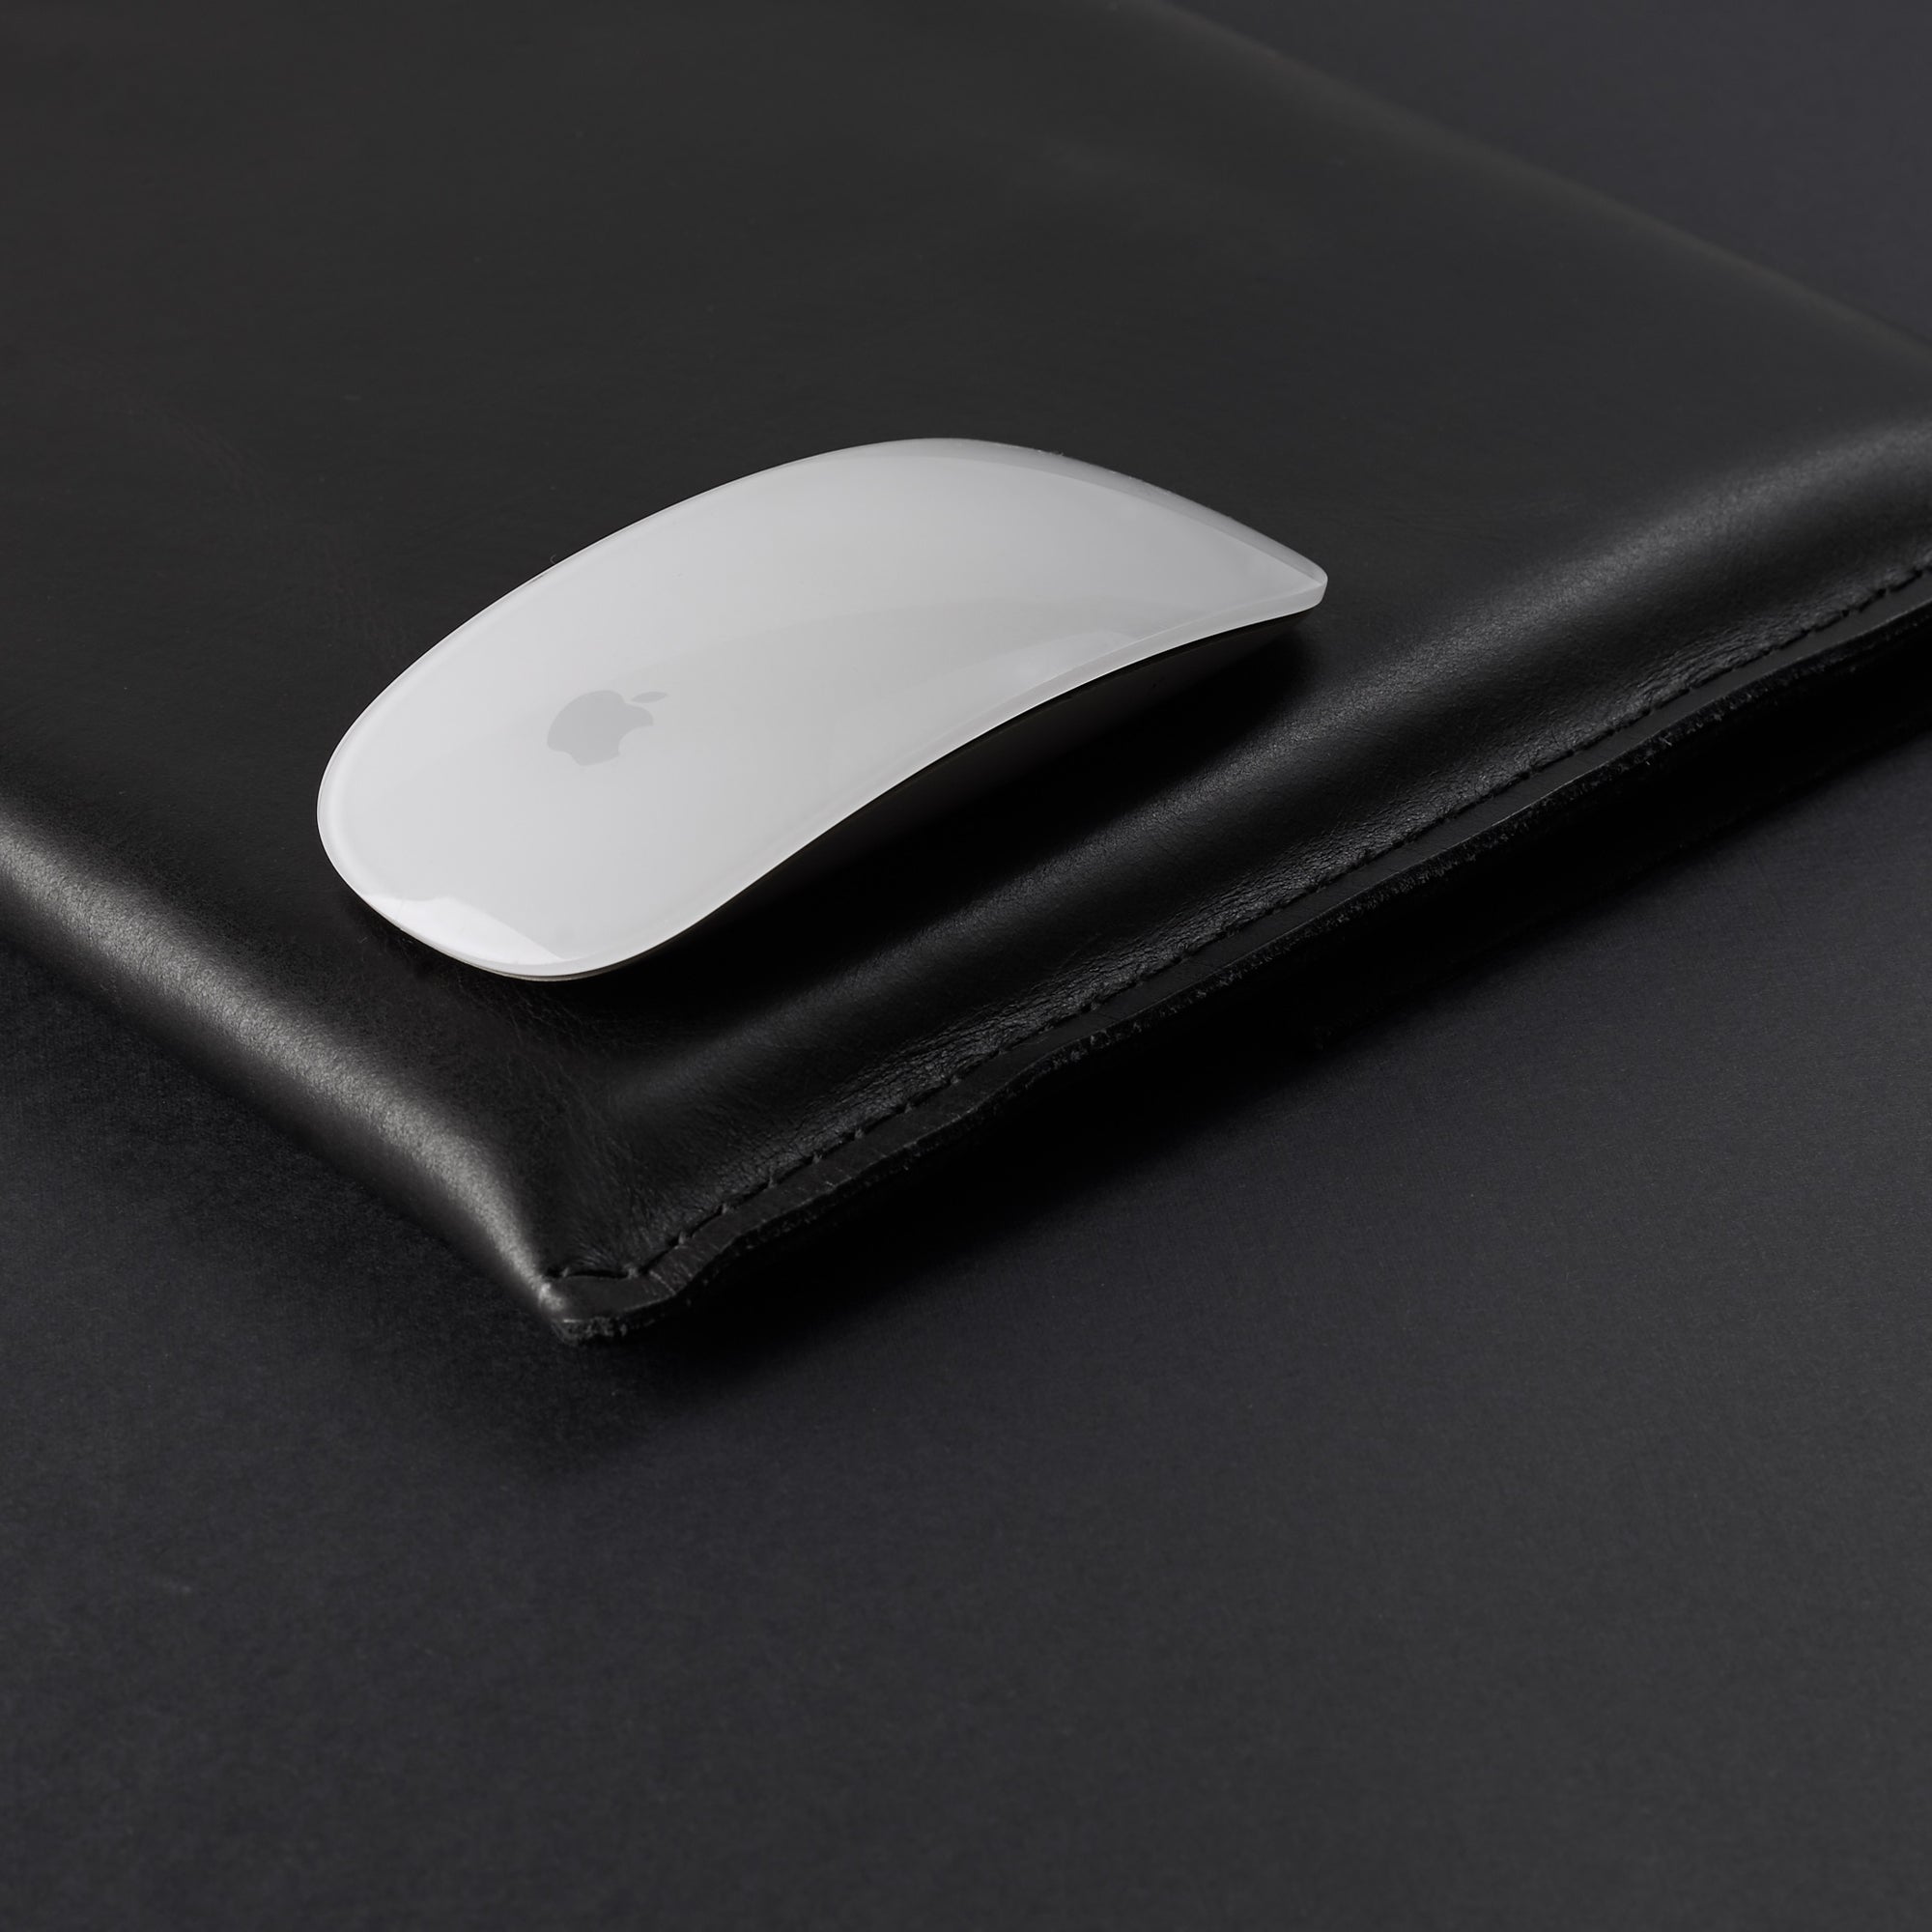 Apple Accessories. Black Leather MacBook Case. MacBook Sleeve by Capra Leather